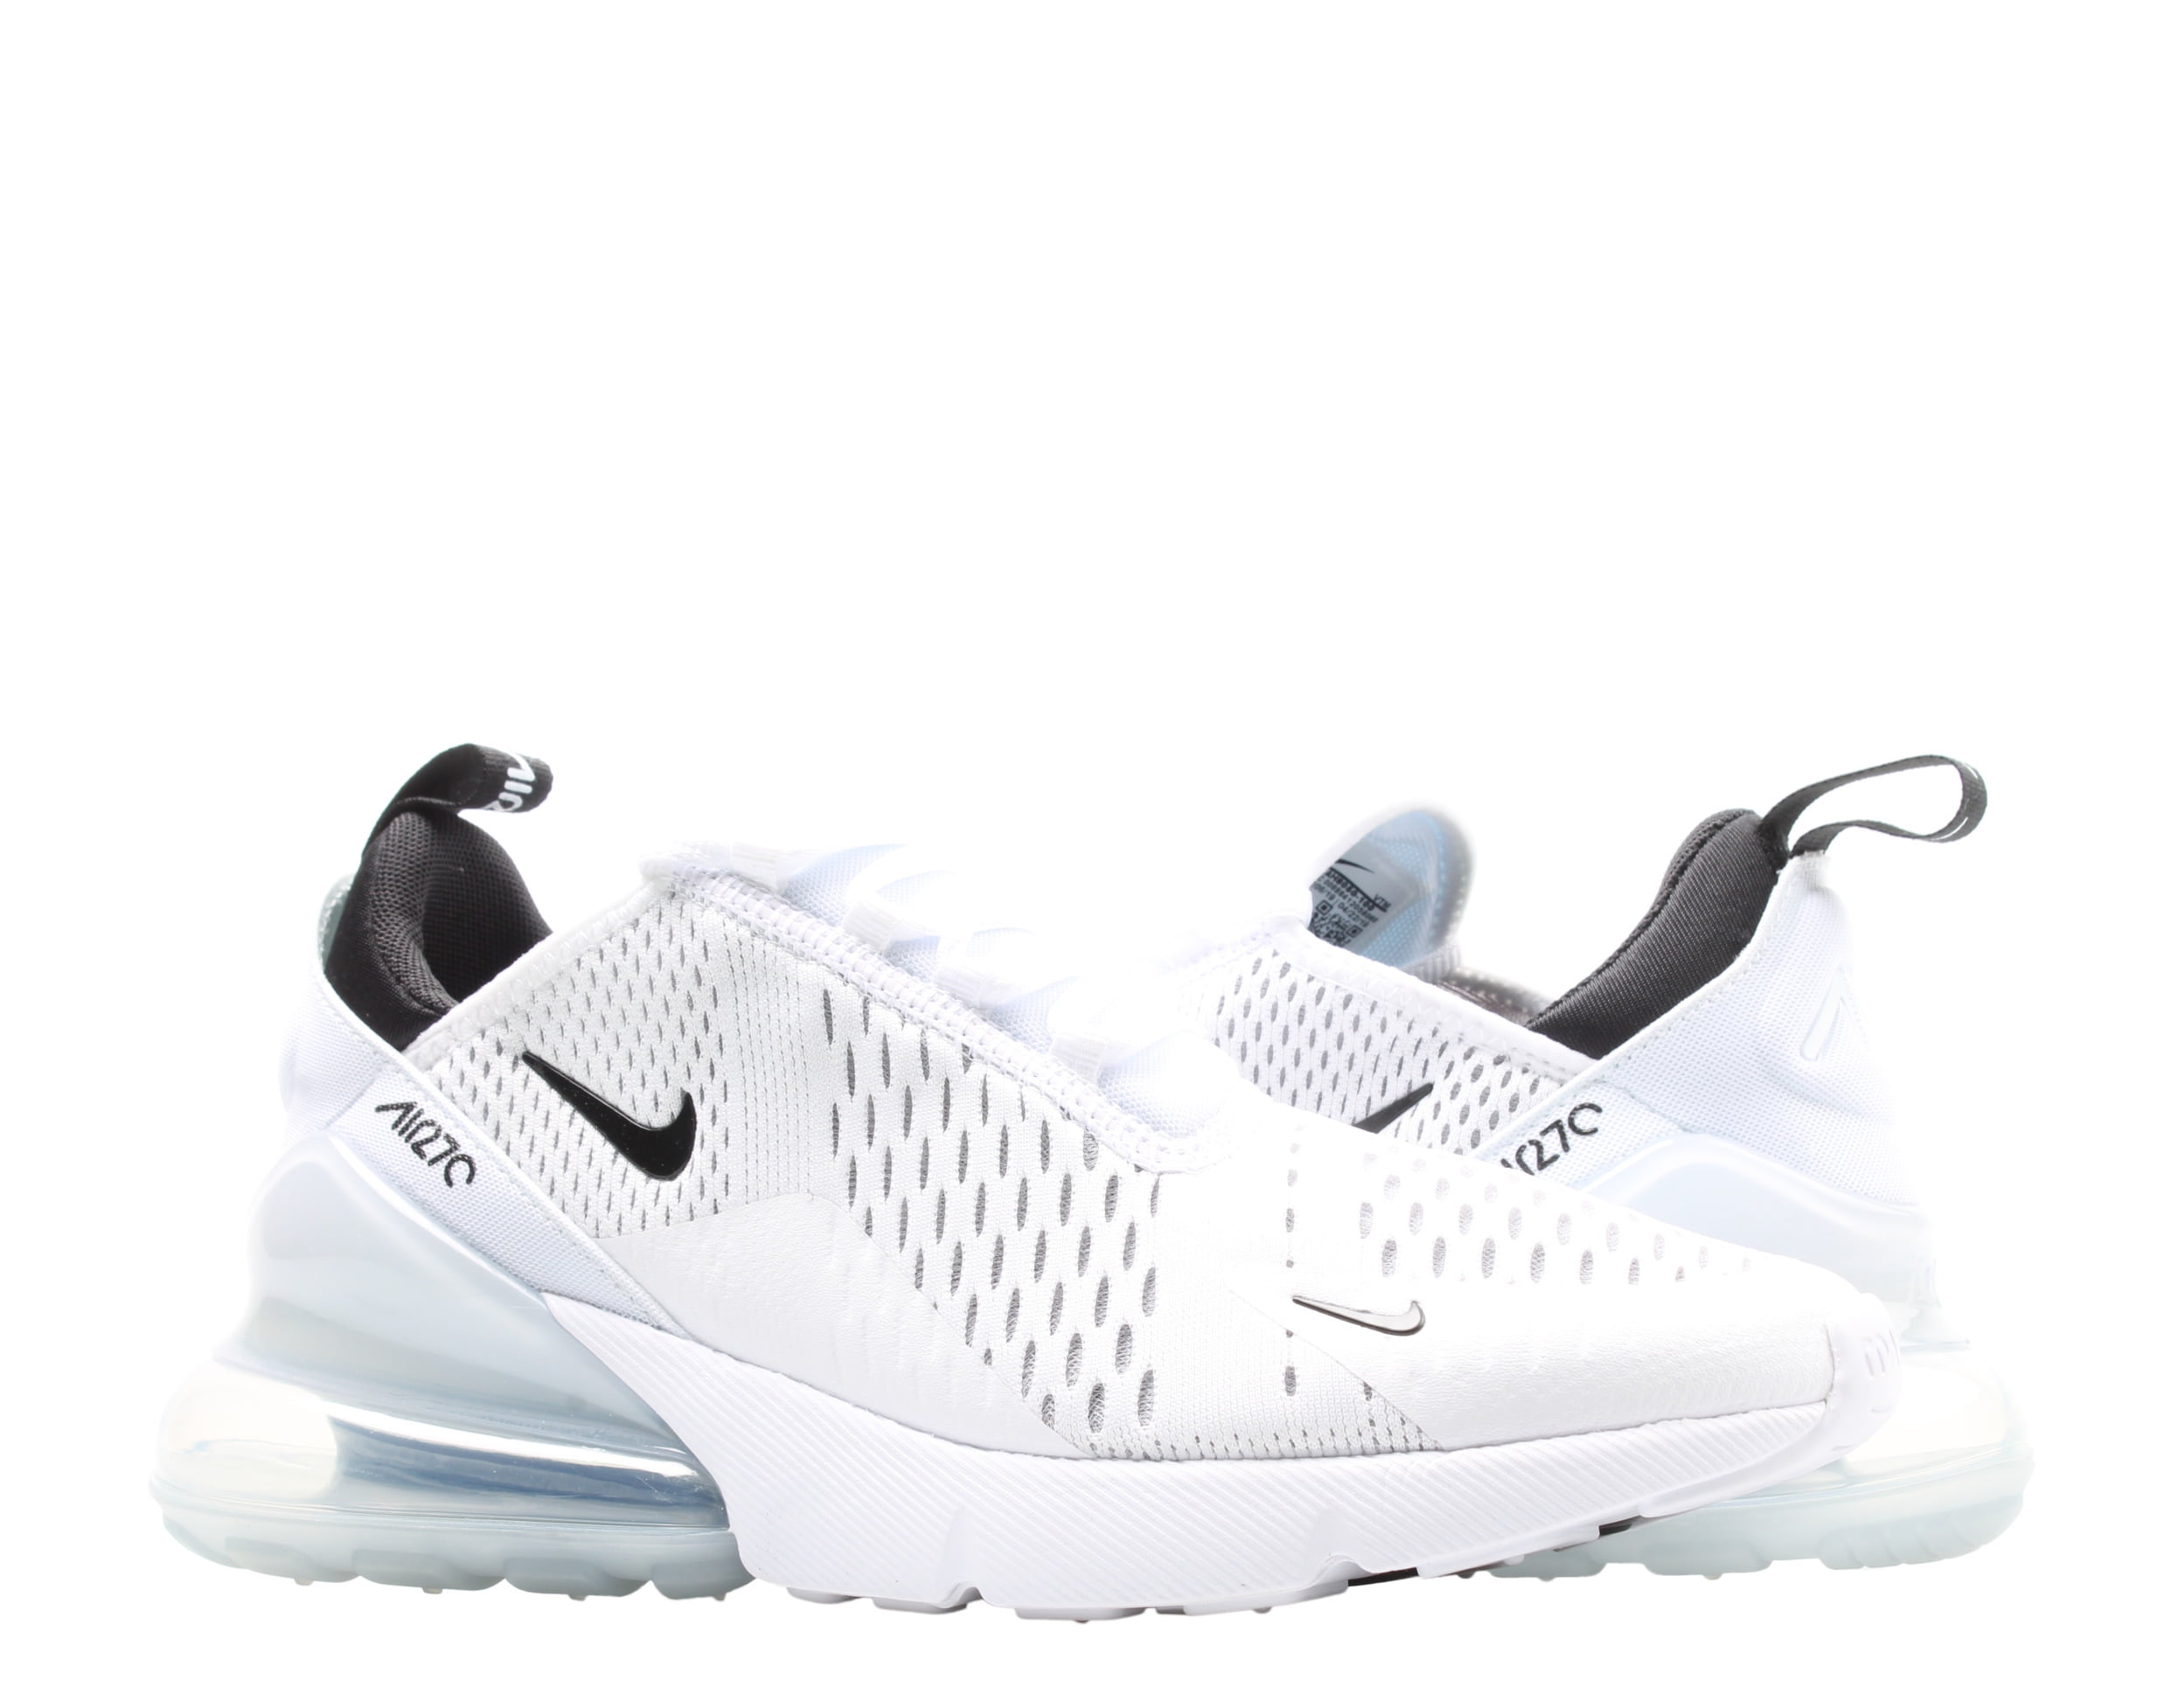 Kosciuszko emergencia Himno Nike Air Max 270 Men's Running Shoes White/Black-White AH8050-100 -  Walmart.com